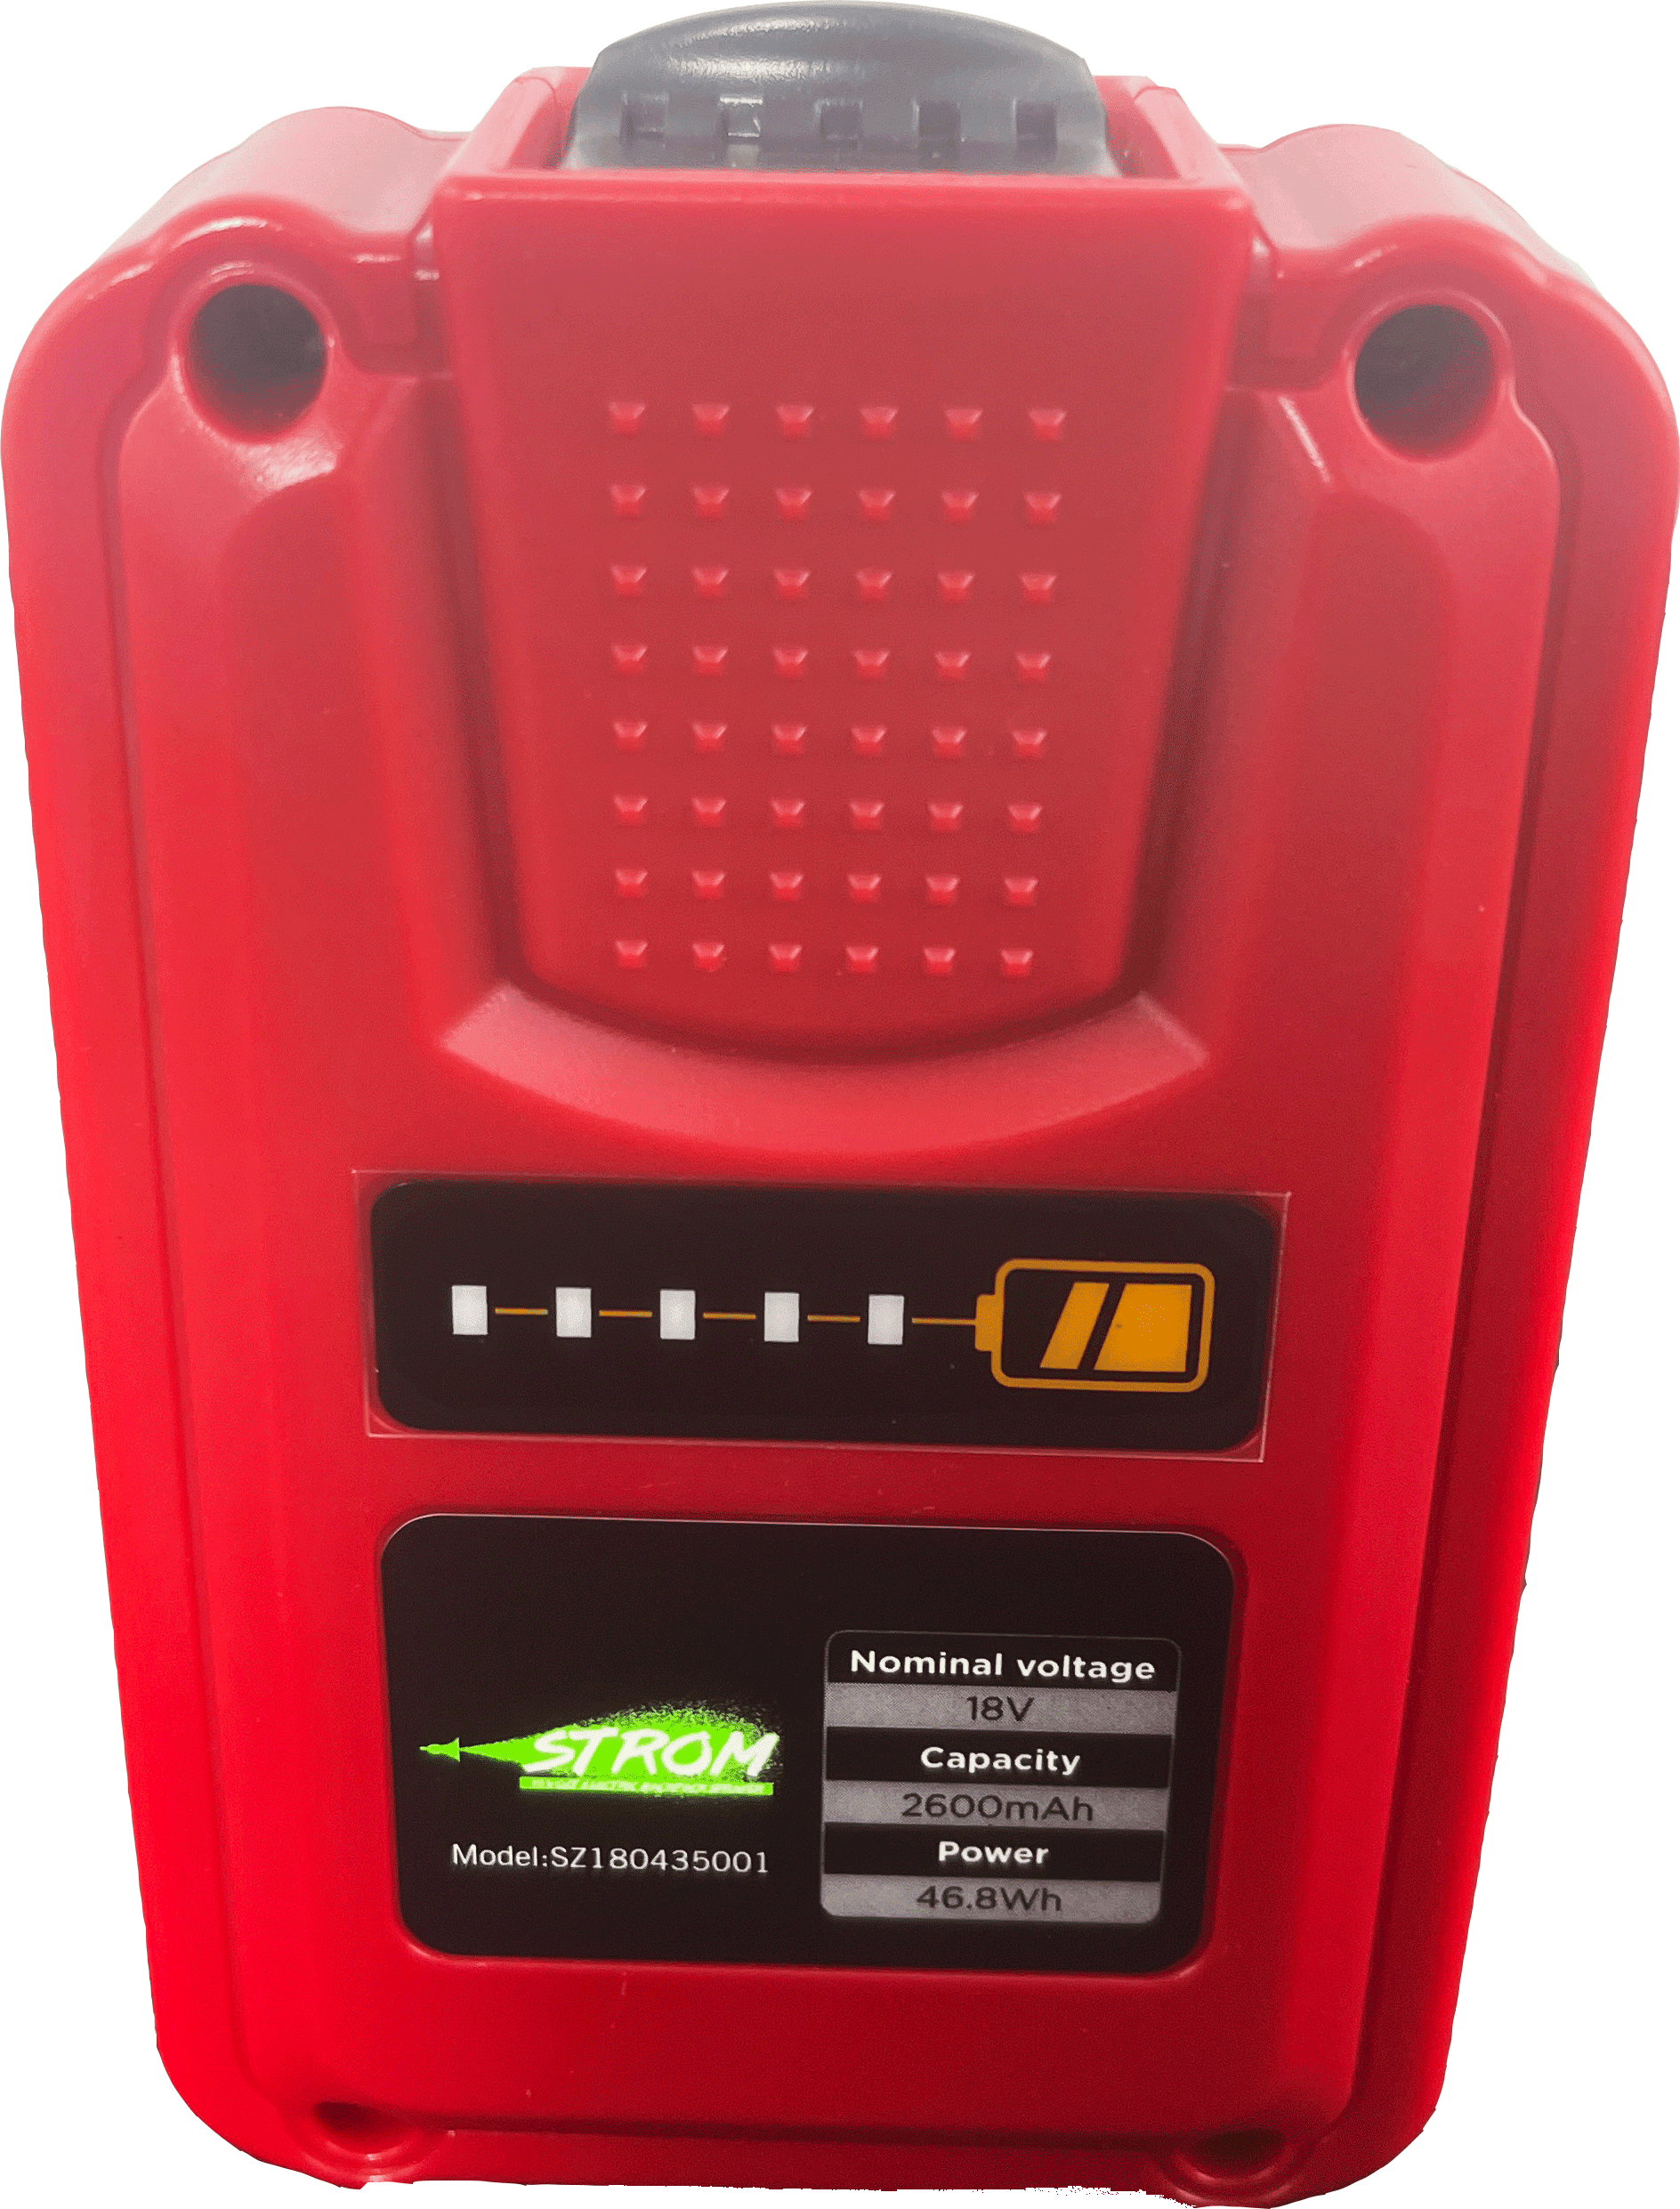 Lithium Ion Battery (18-Volt ) | Strom Series | 9012 - TrailerRacks.com